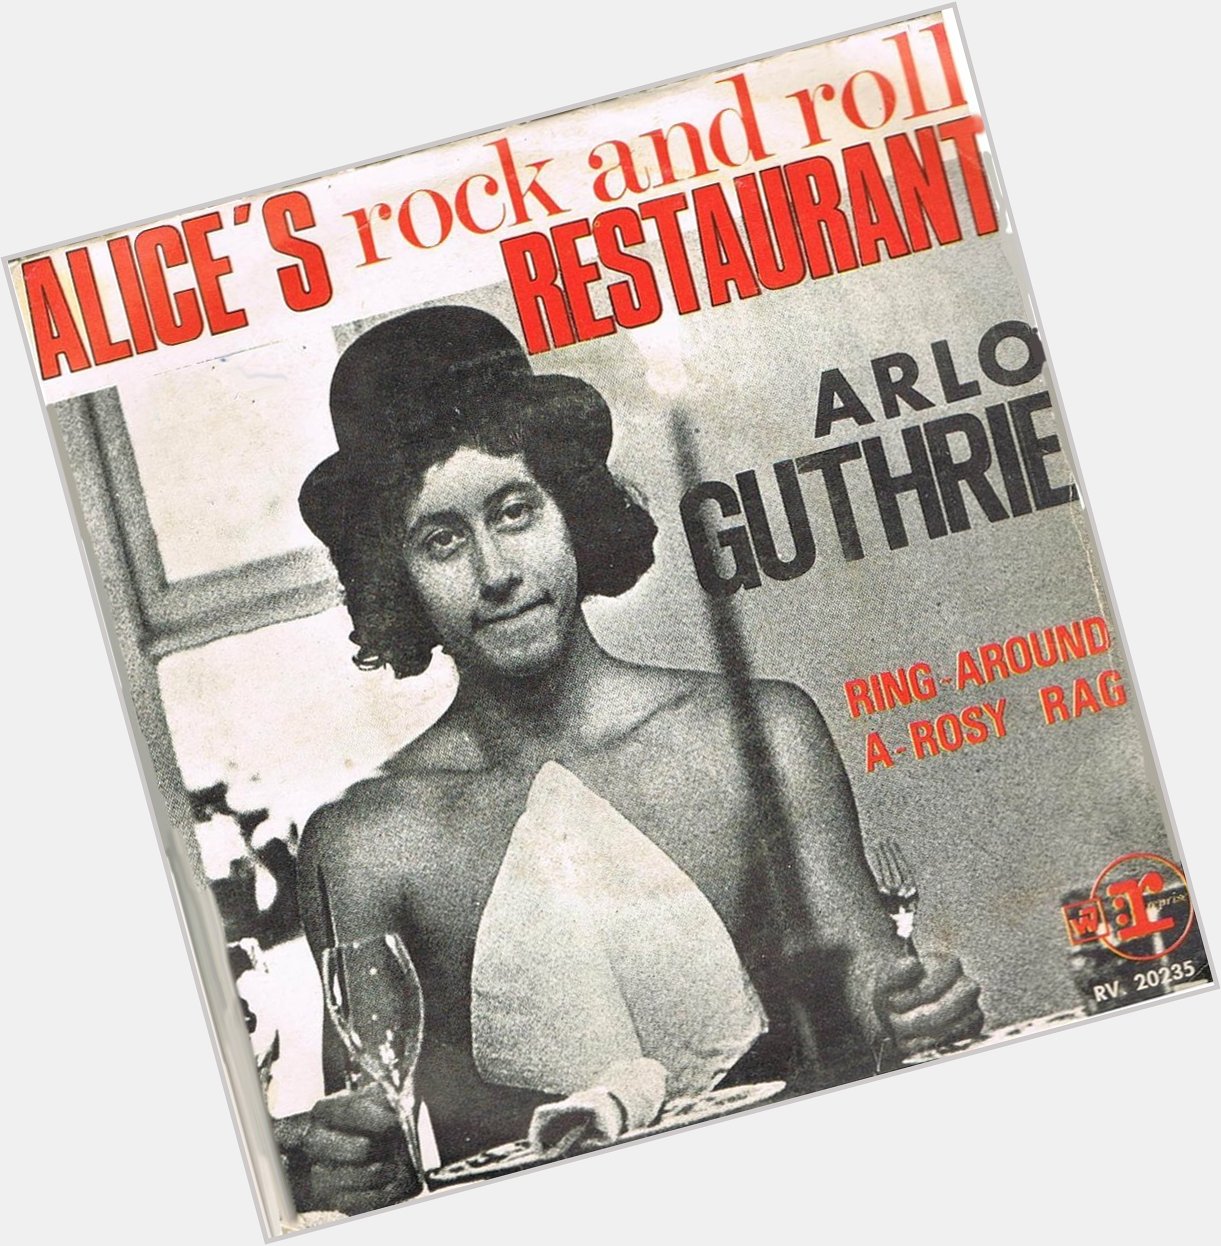 Happy birthday Arlo Guthrie, born today in 1947! 